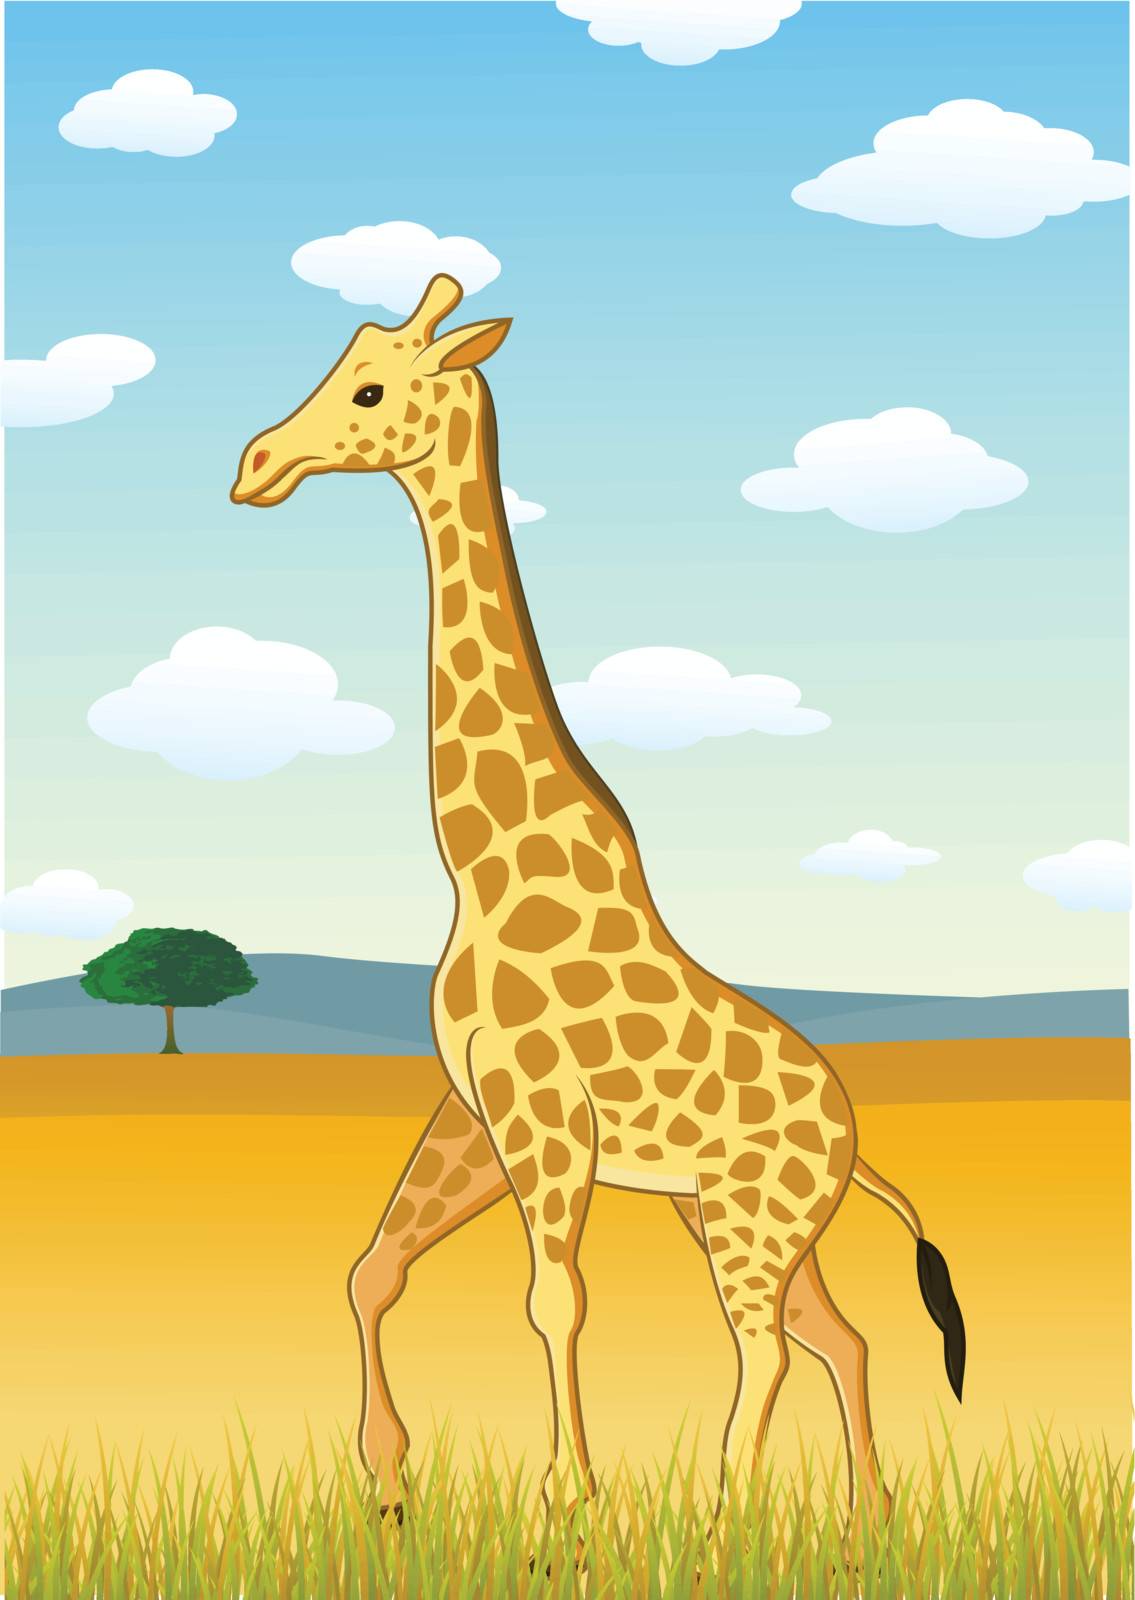 vect0or illustration of Giraffe against savannah landscape